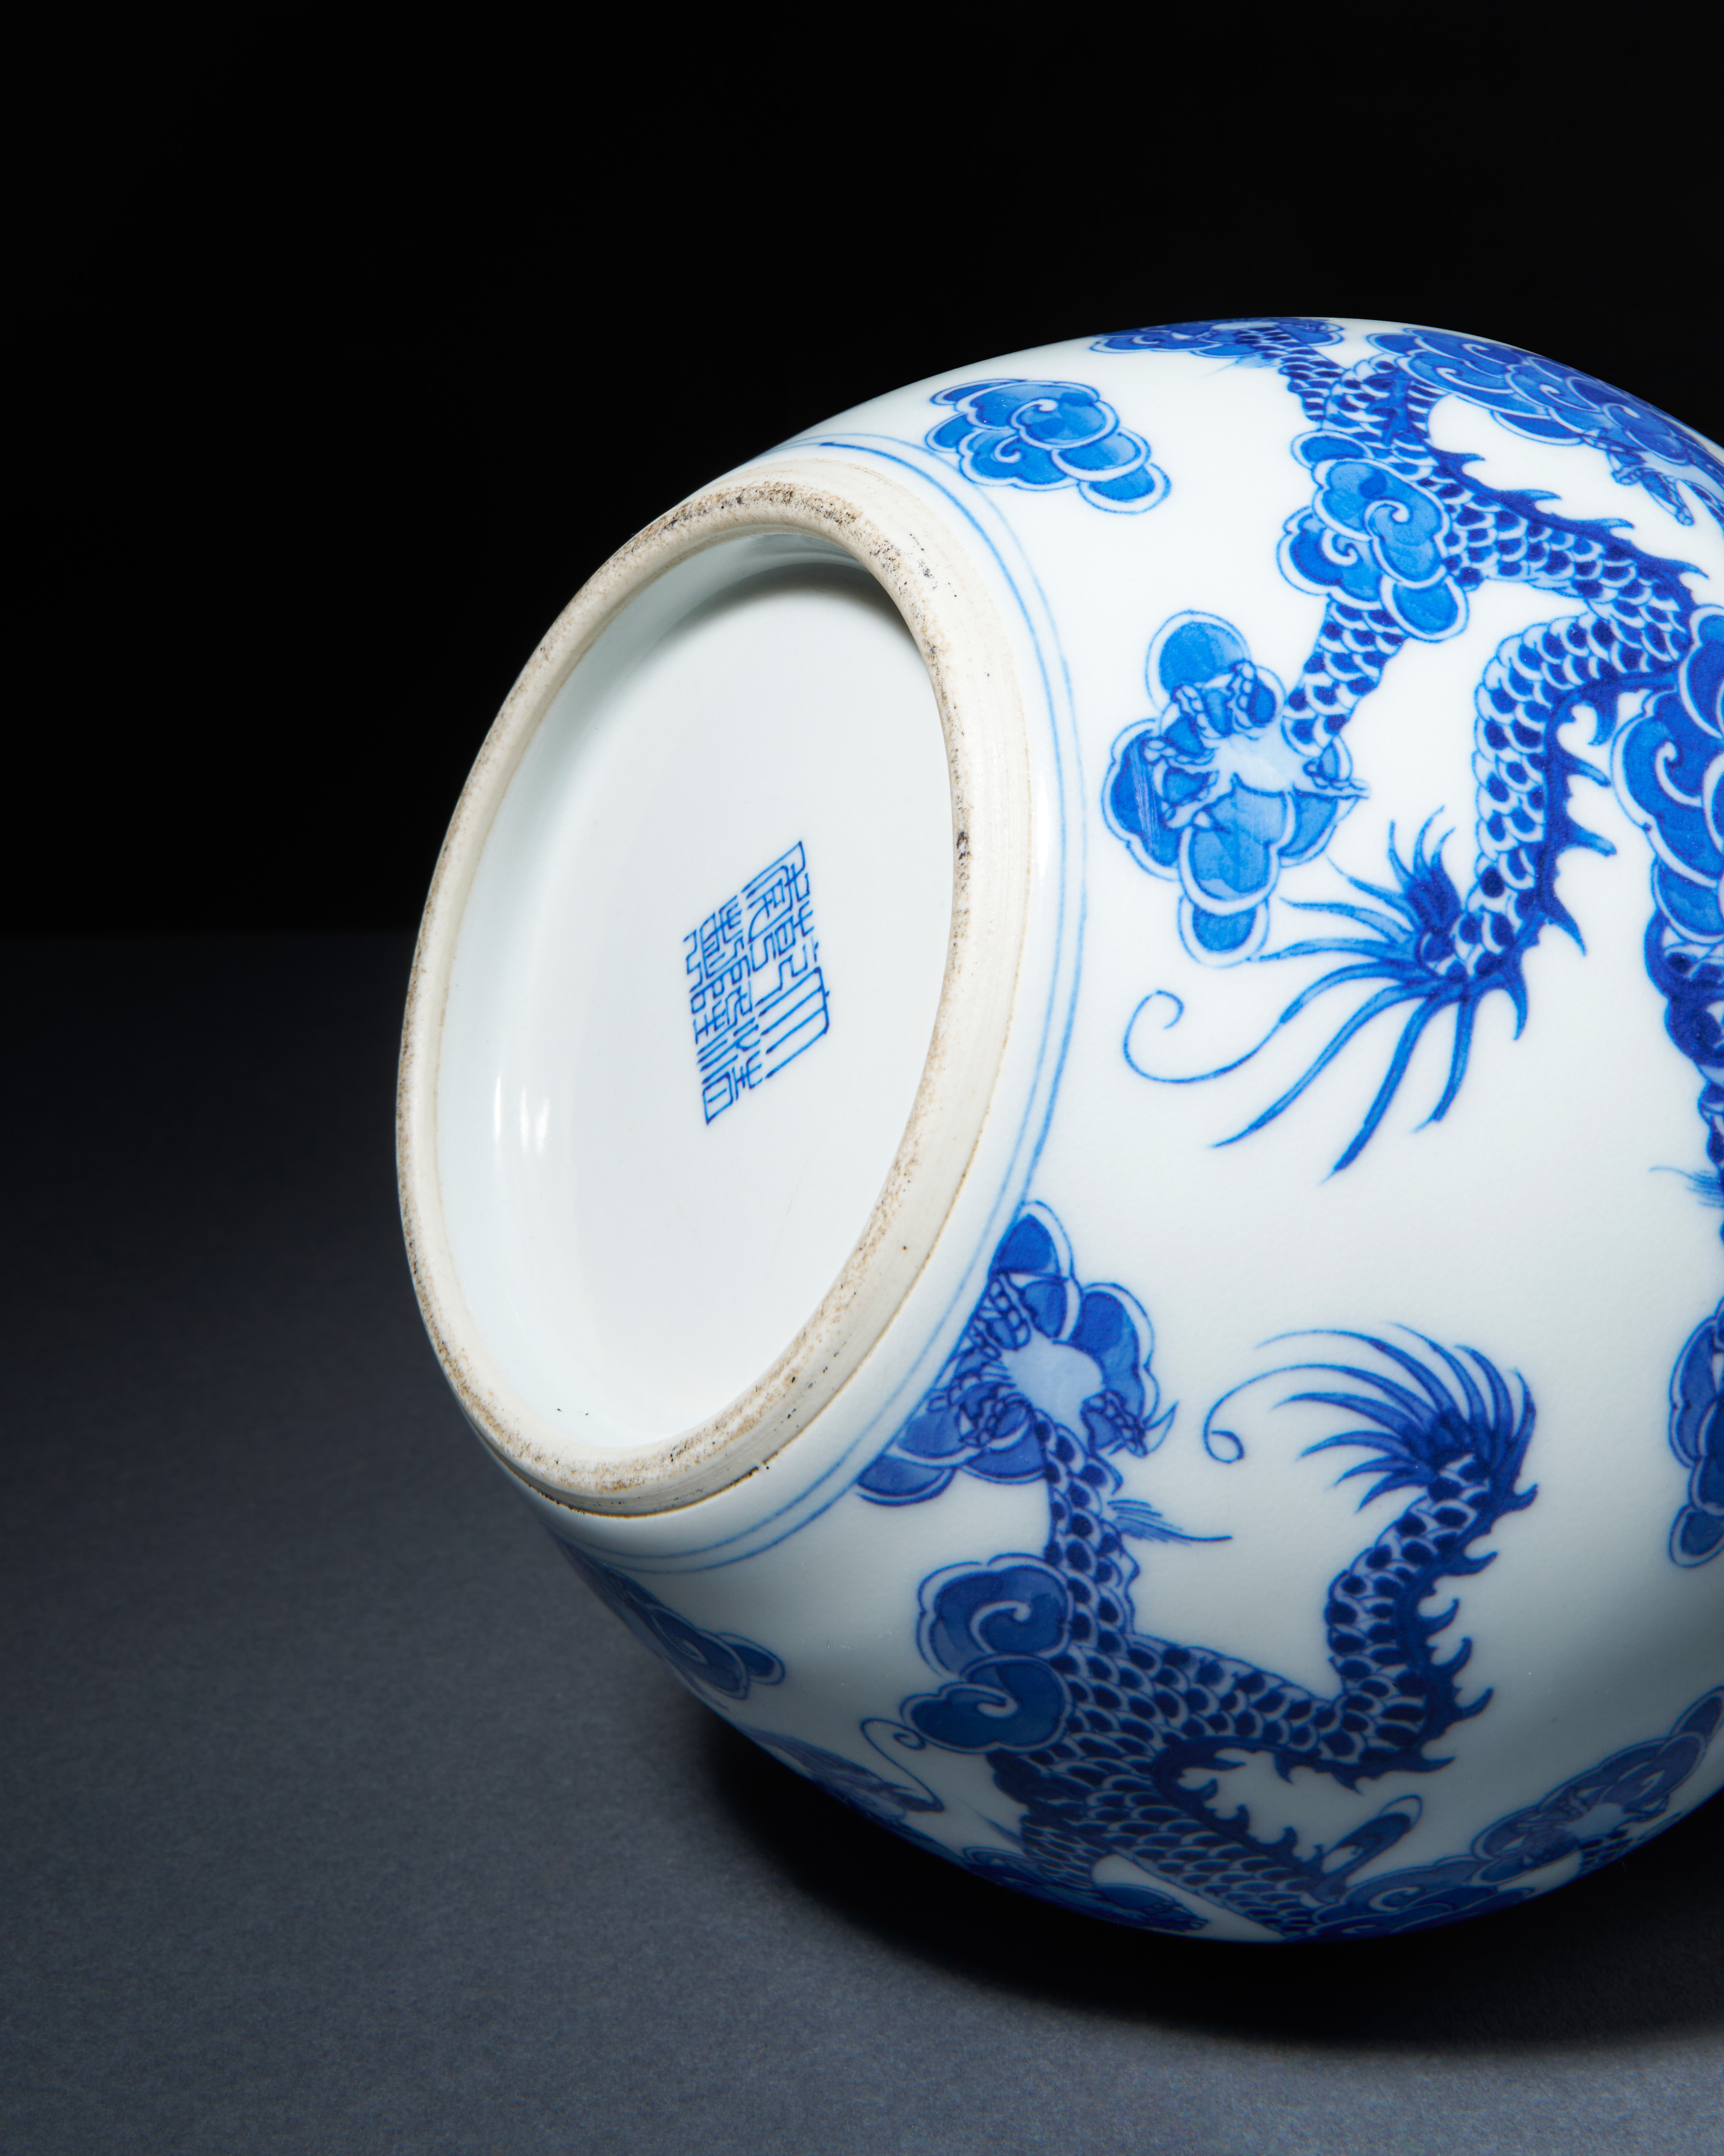 A CHINESE BLUE & WHITE BOTTLE VASE, QING DYNASTY (1644-1911) - Image 6 of 6